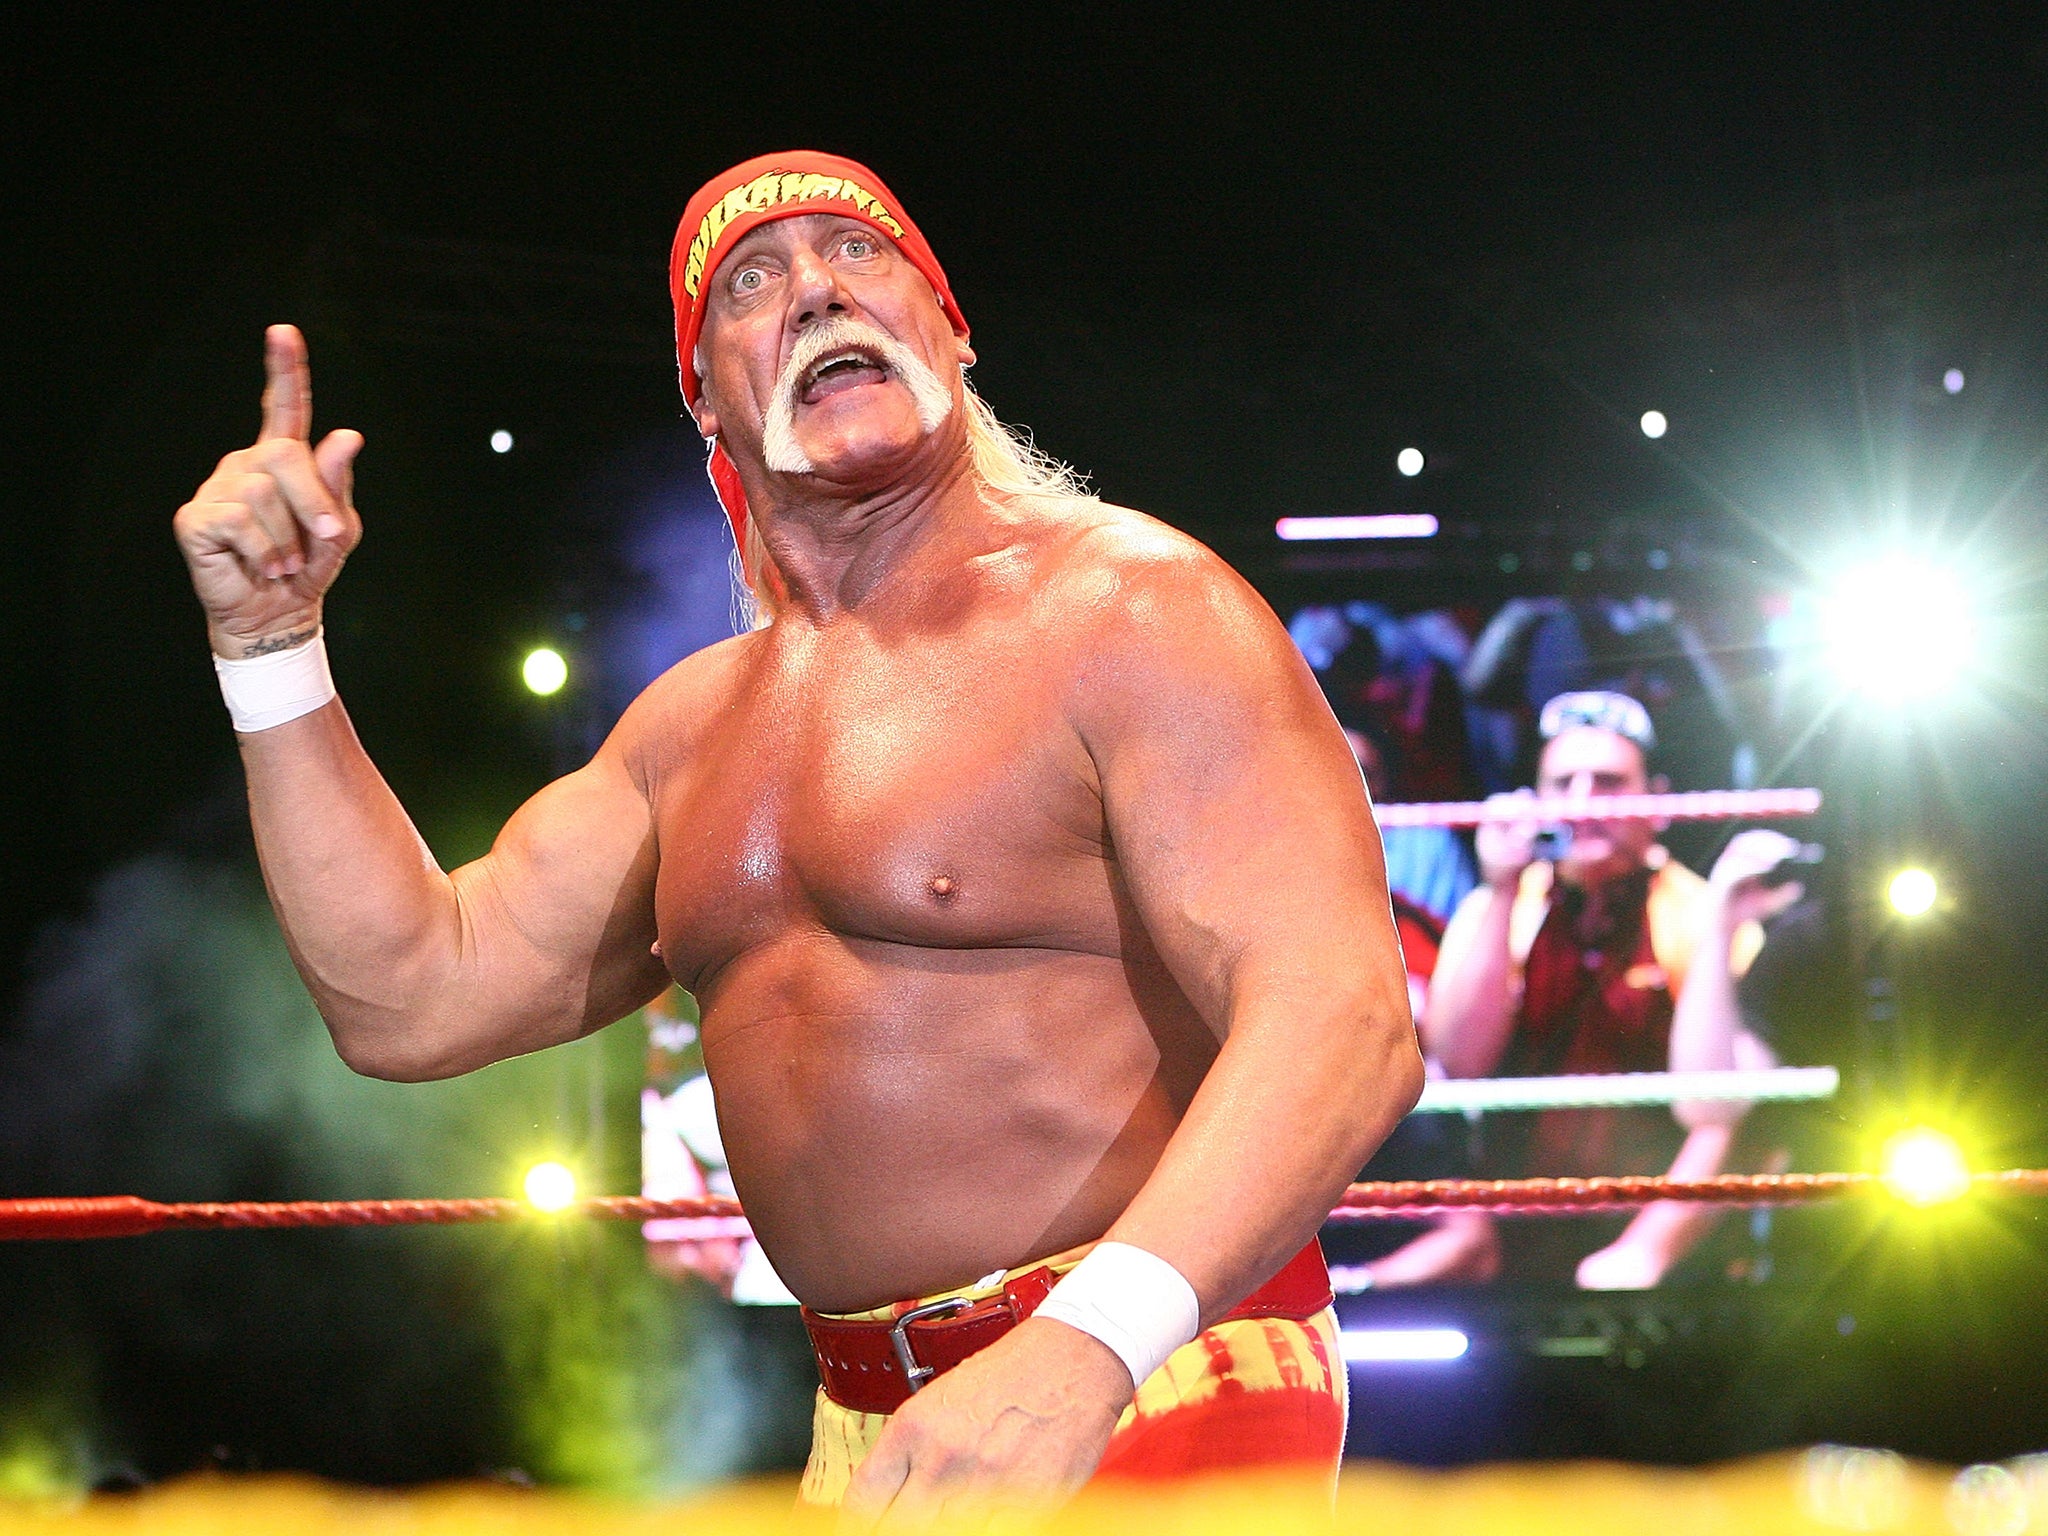 Hulk Hogan is keen to get involved